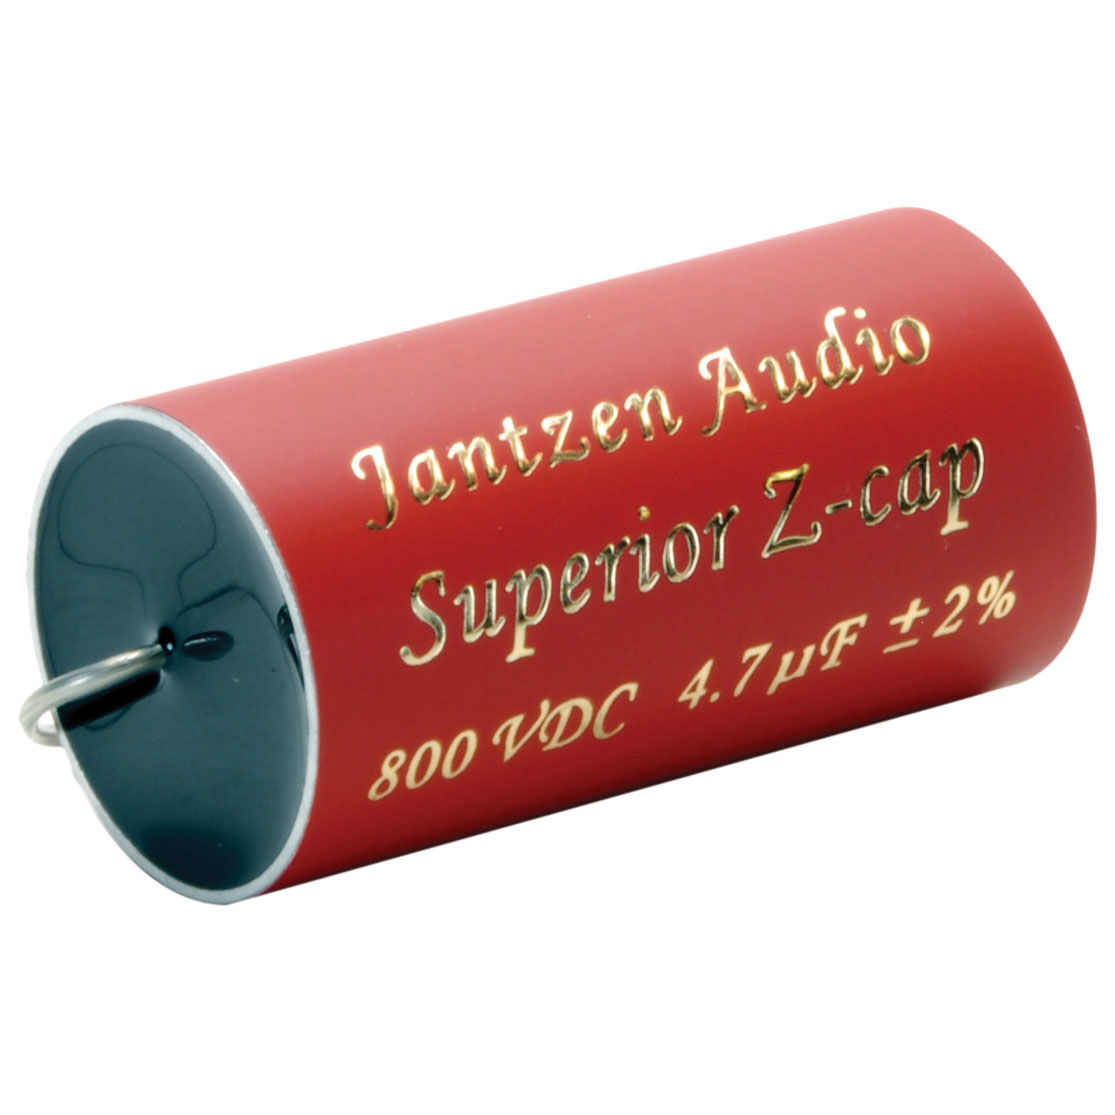 Jantzen Audio 4.7uF 800V Z-Superior Capacitor